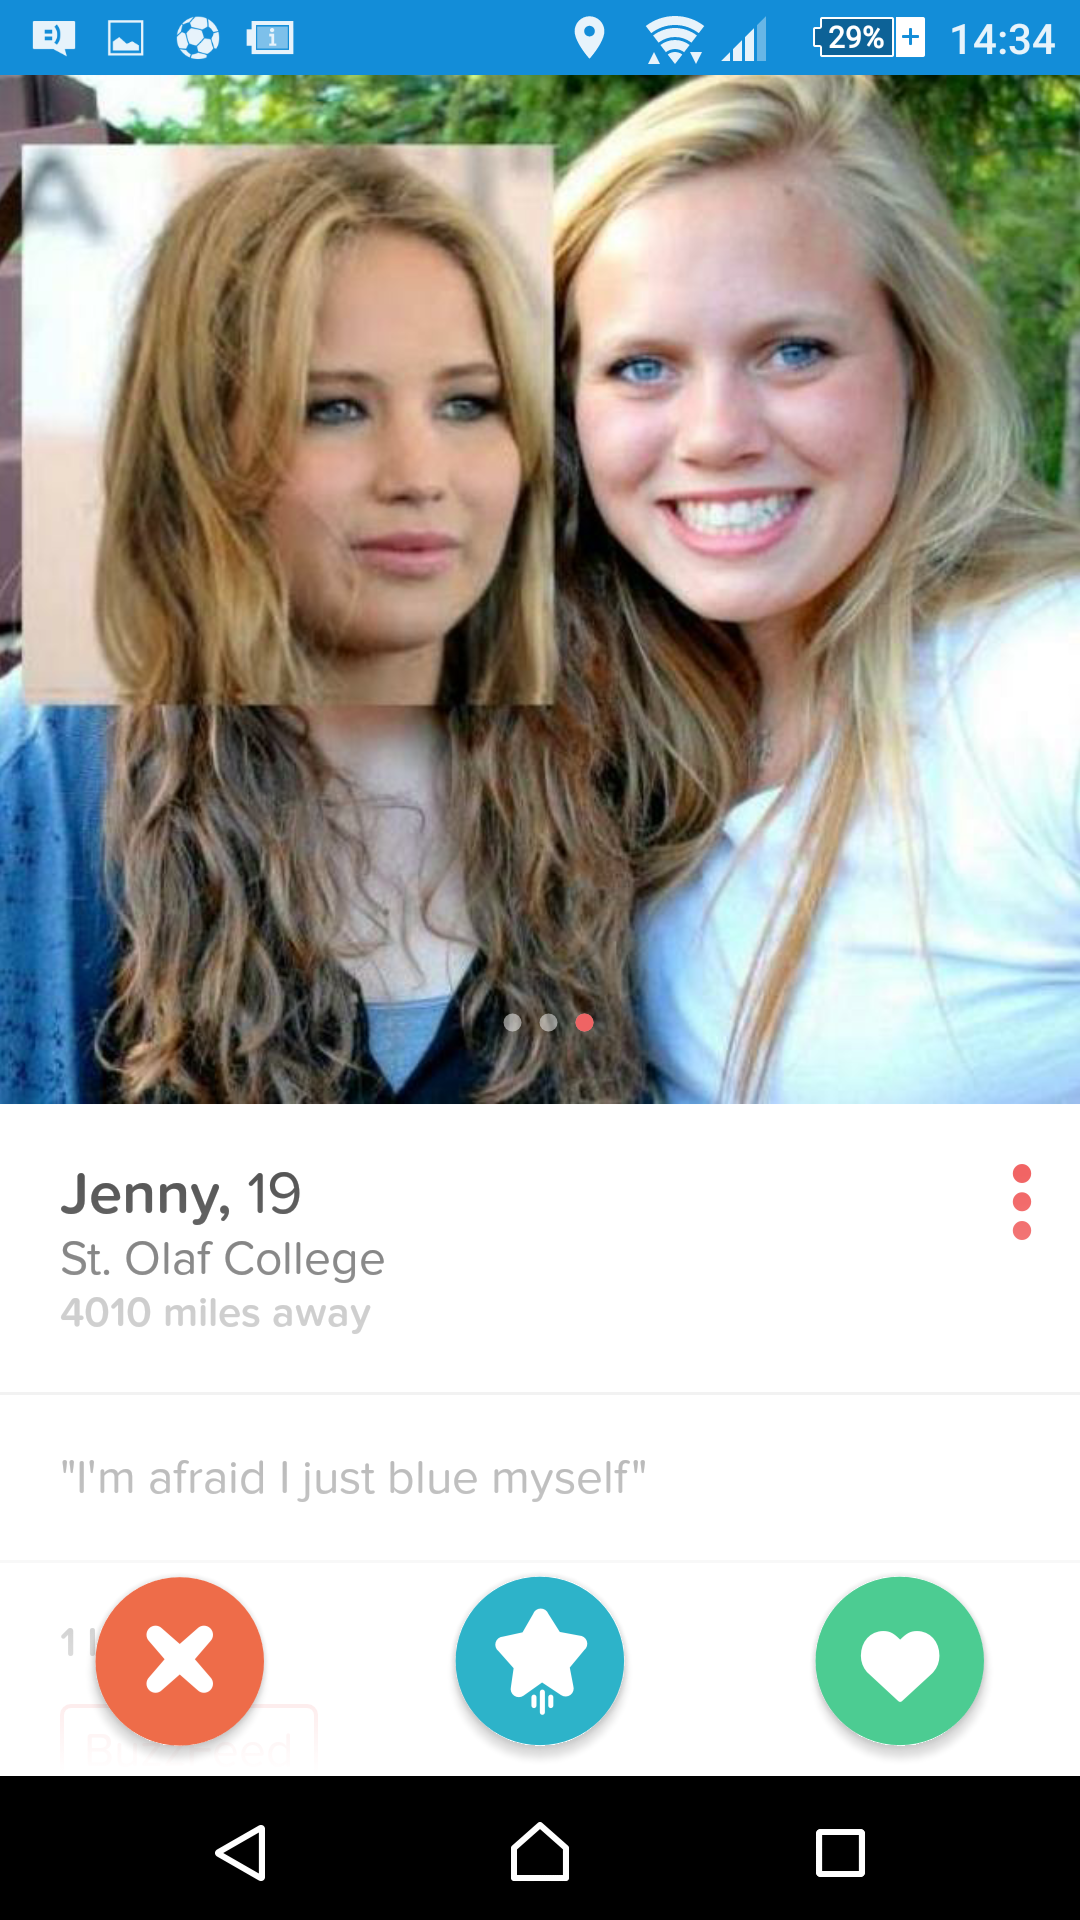 blond - O . 295 Jenny, 19 St. Olaf College 4010 miles away I'm afraid just blue myself